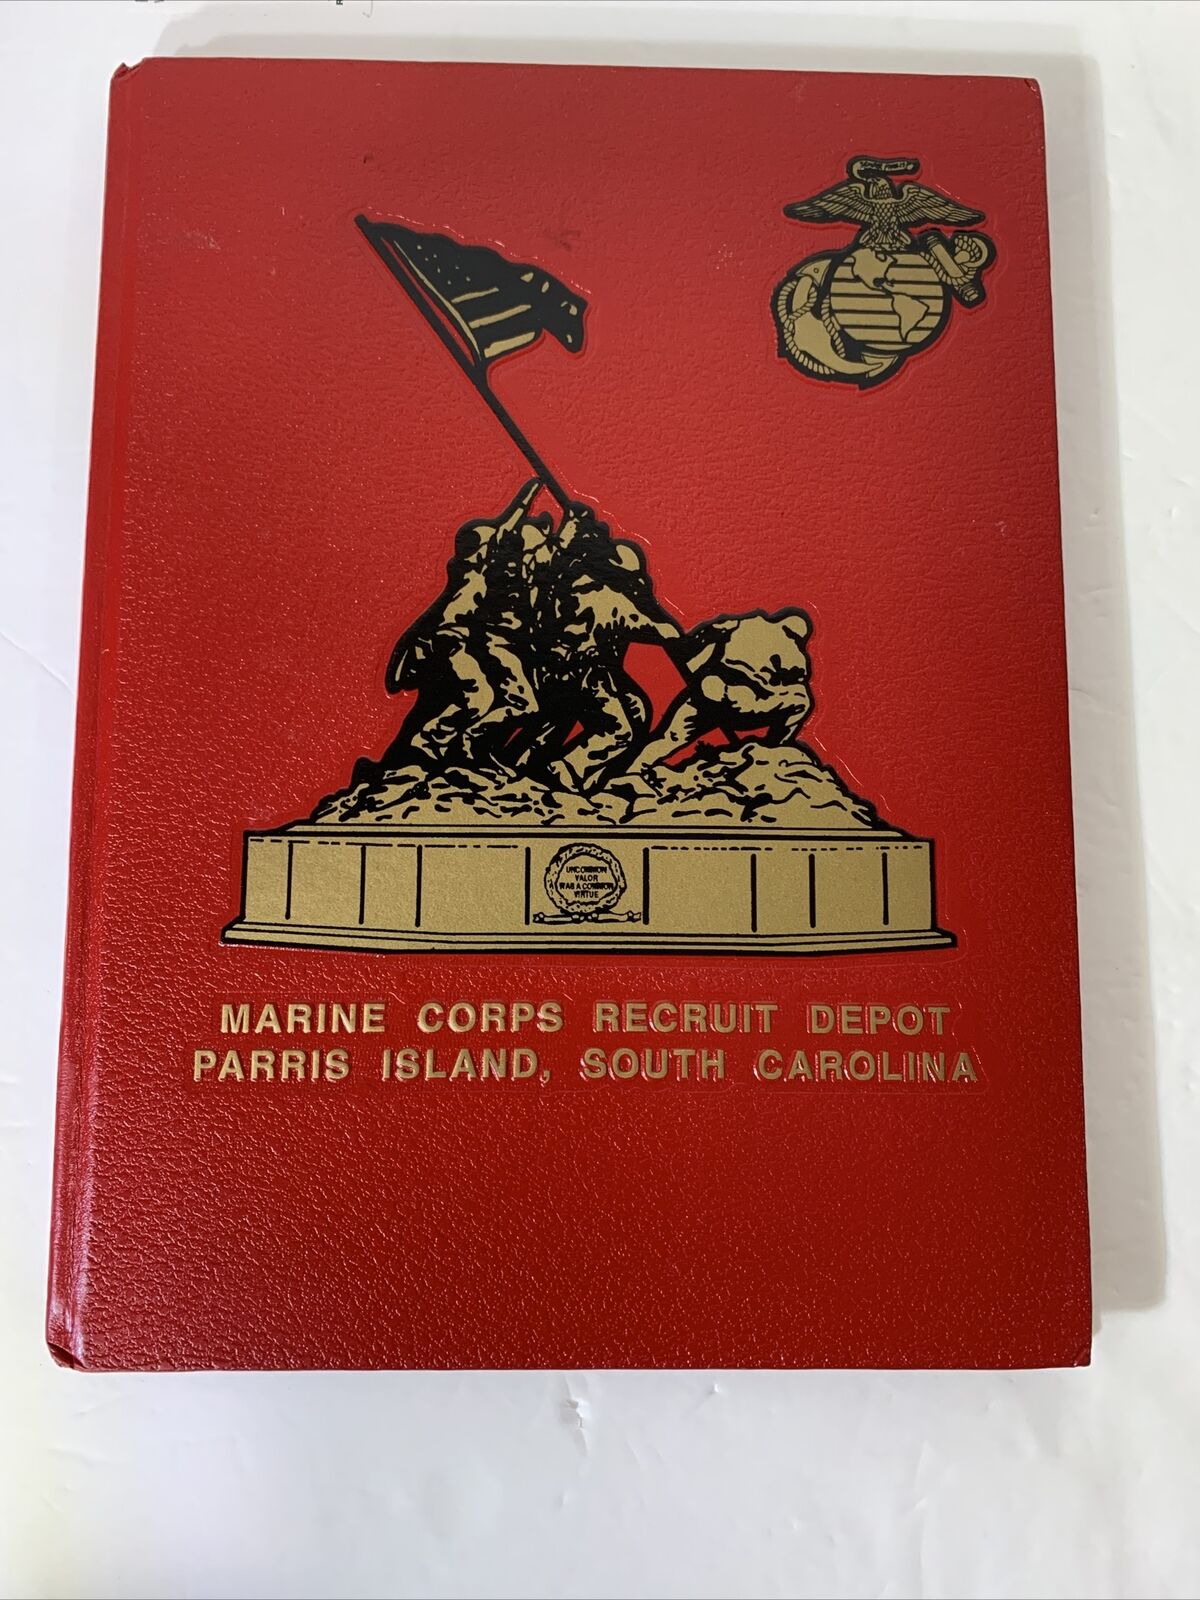 2008 Yearbook Marine Corps Recruit Depot Paris Island Platoons 3080 - 3083